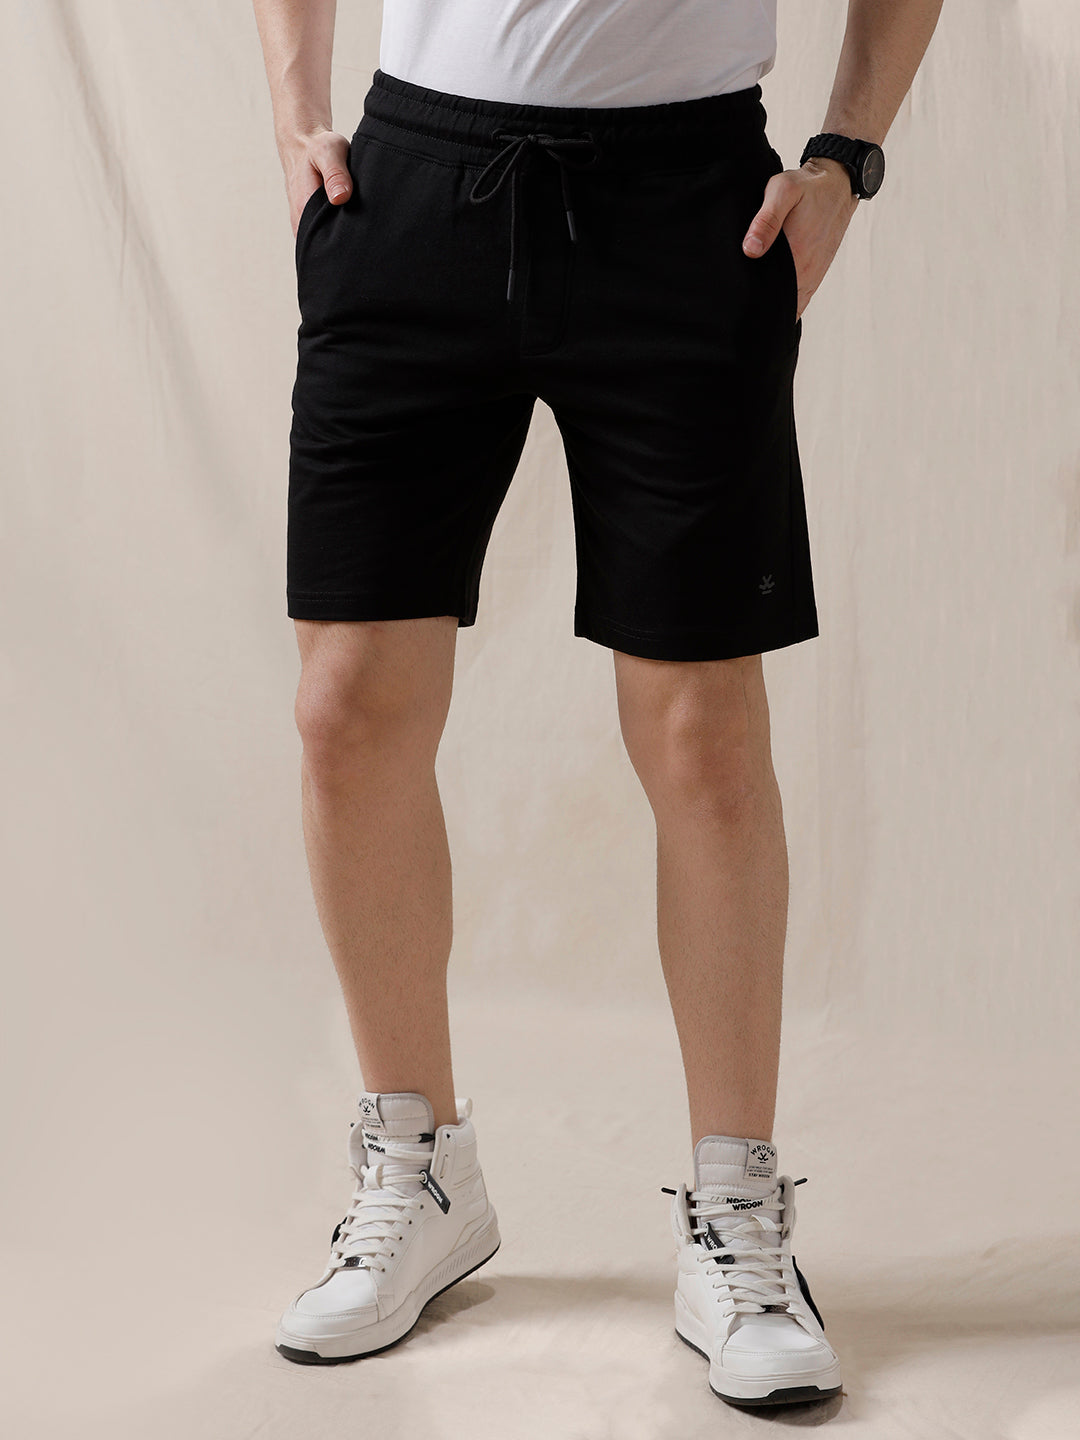 Solid Black Cotton Shorts